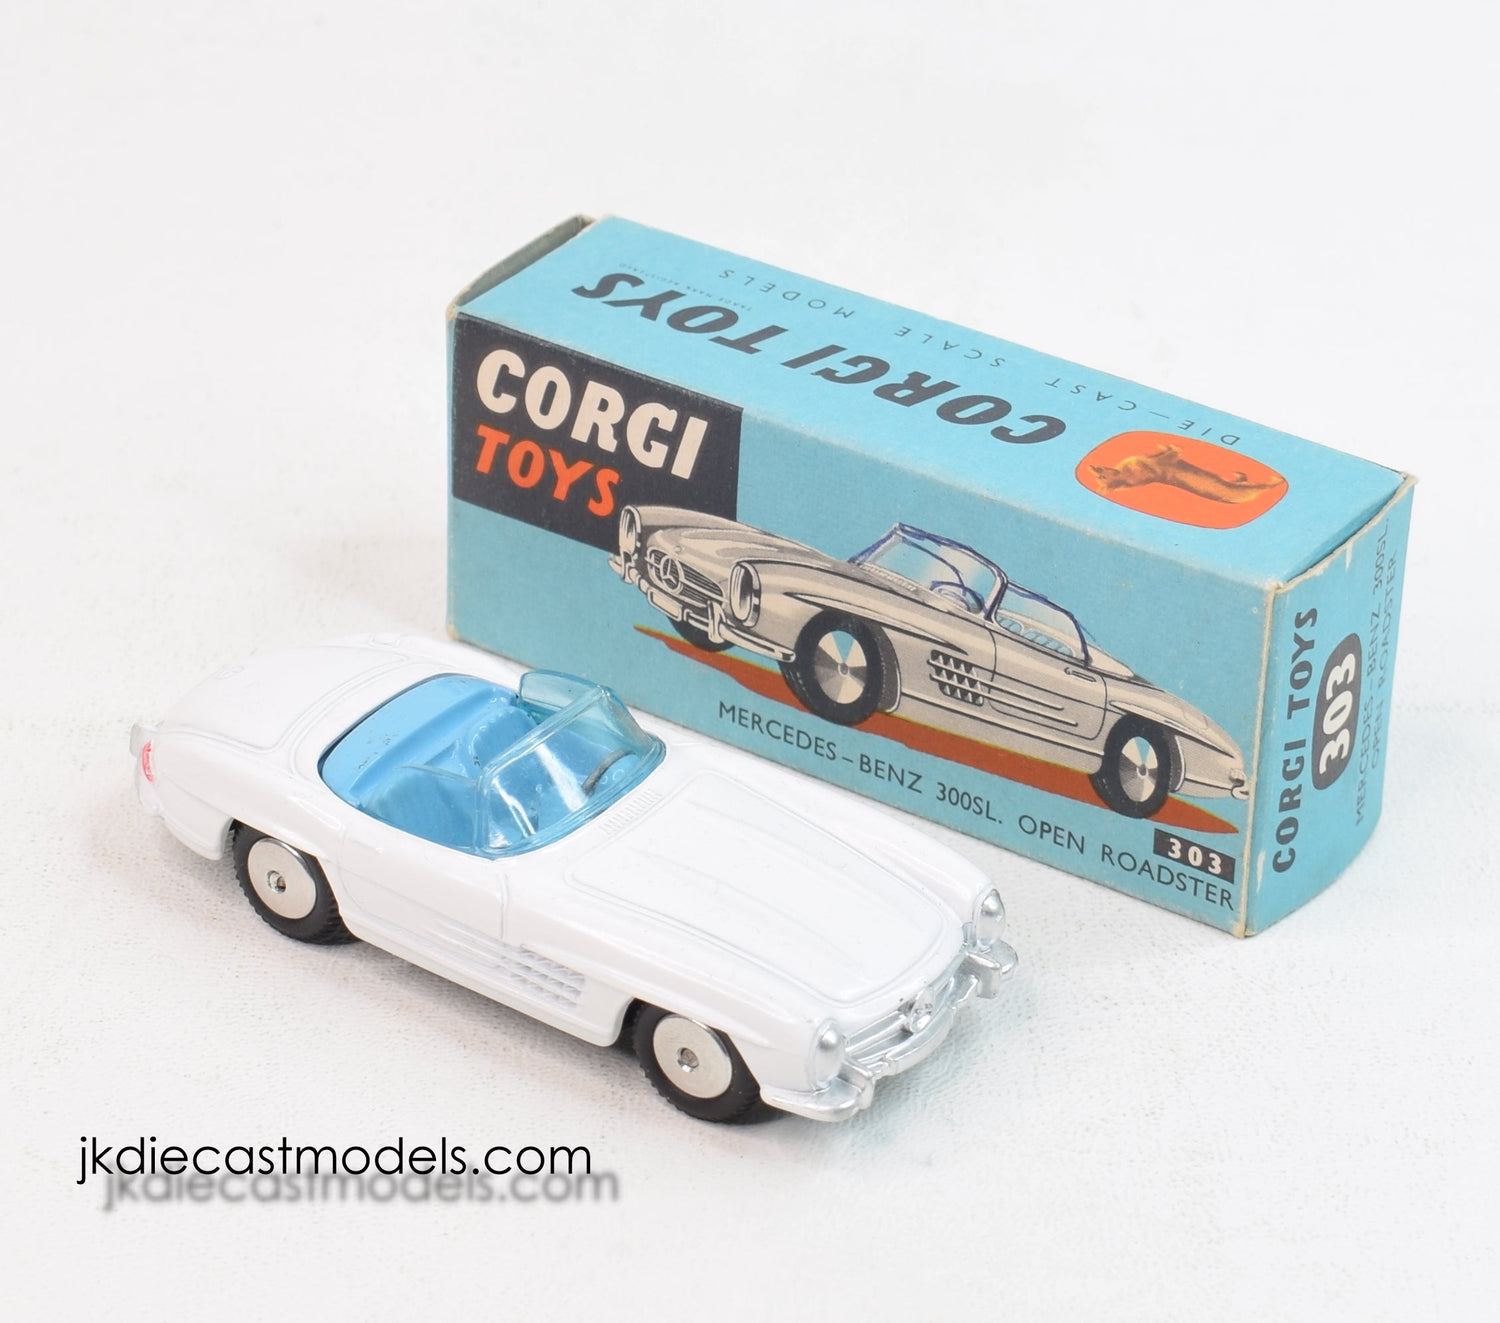 Corgi toys 303 Mercedes-Benz 300sl Roadster Virtually Mint/Boxed